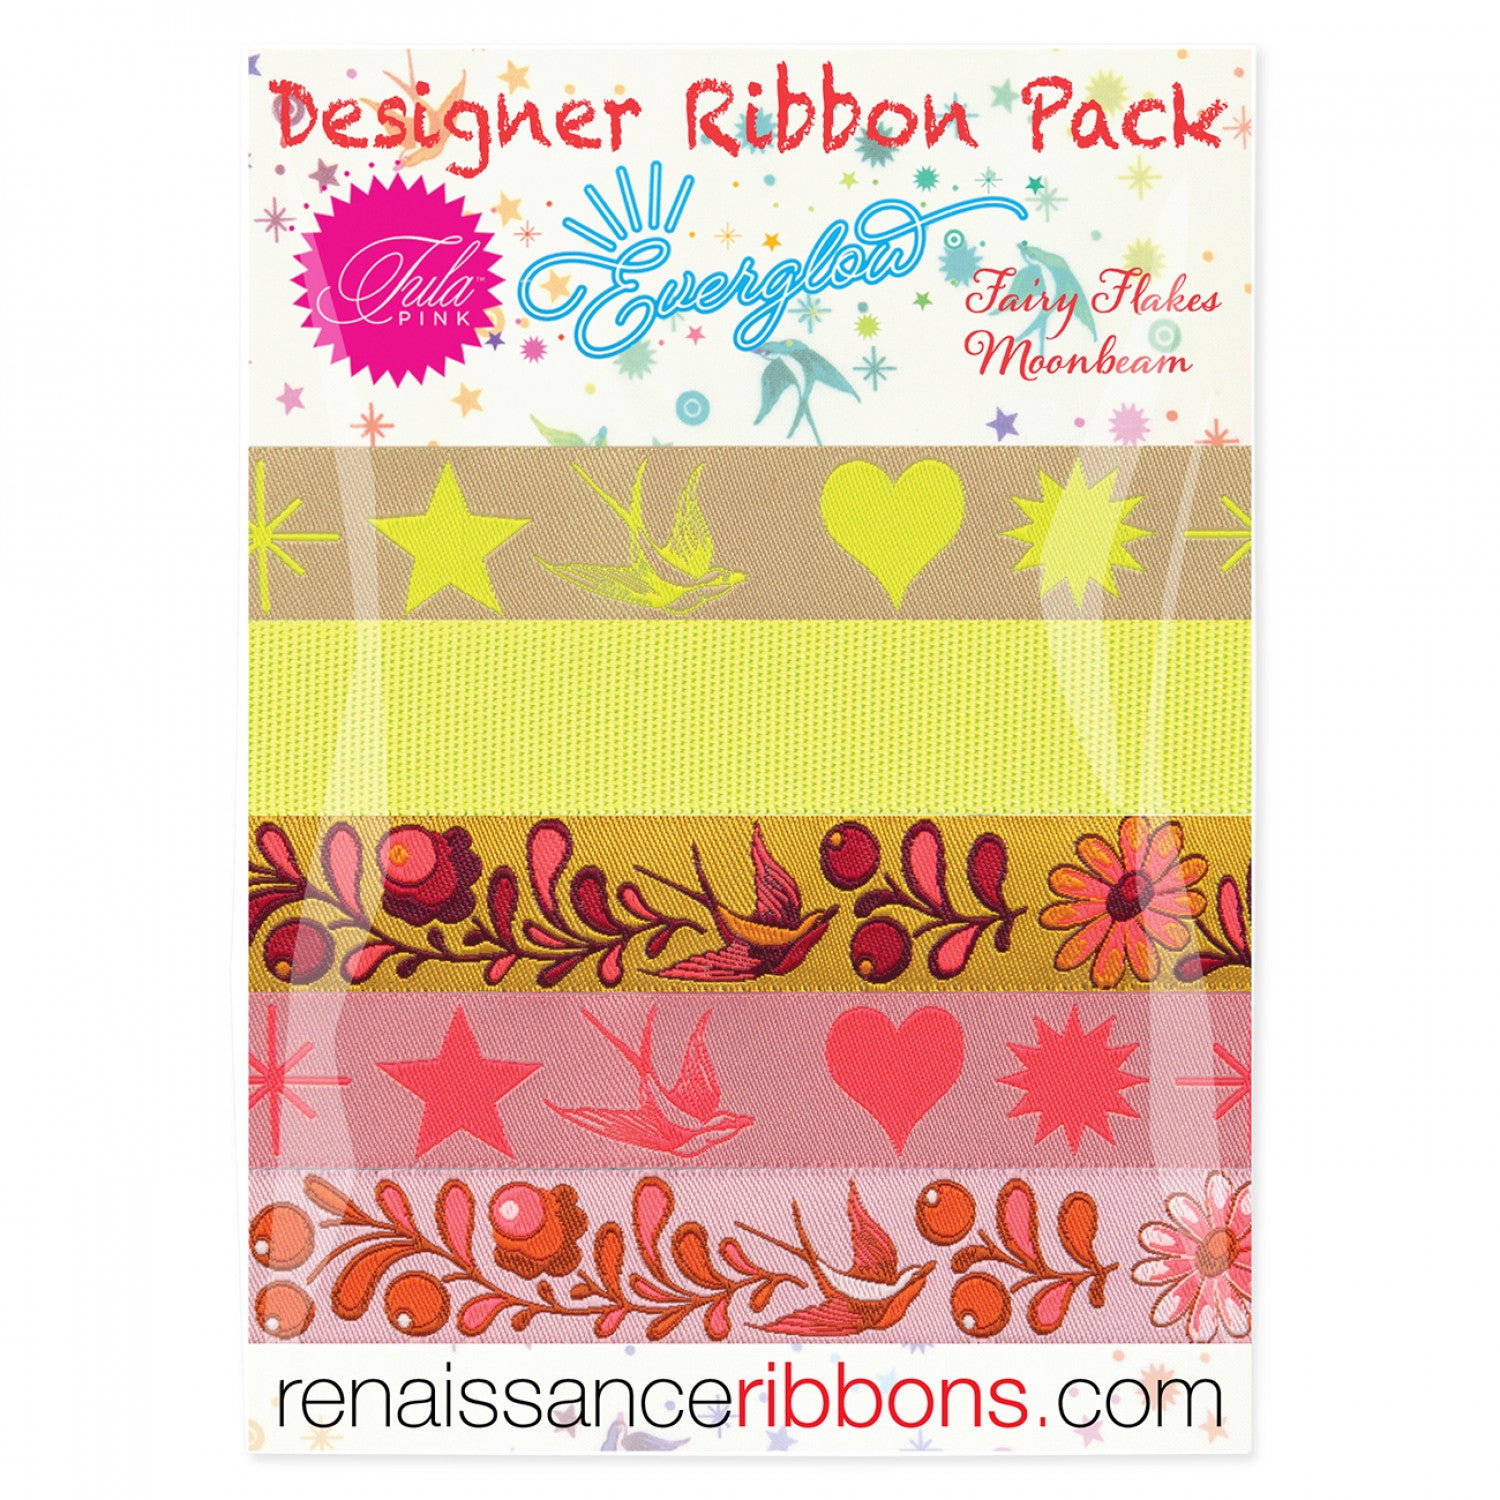 Moonglow Designer Ribbon Pack by Tula Pink for Renaissance Ribbons